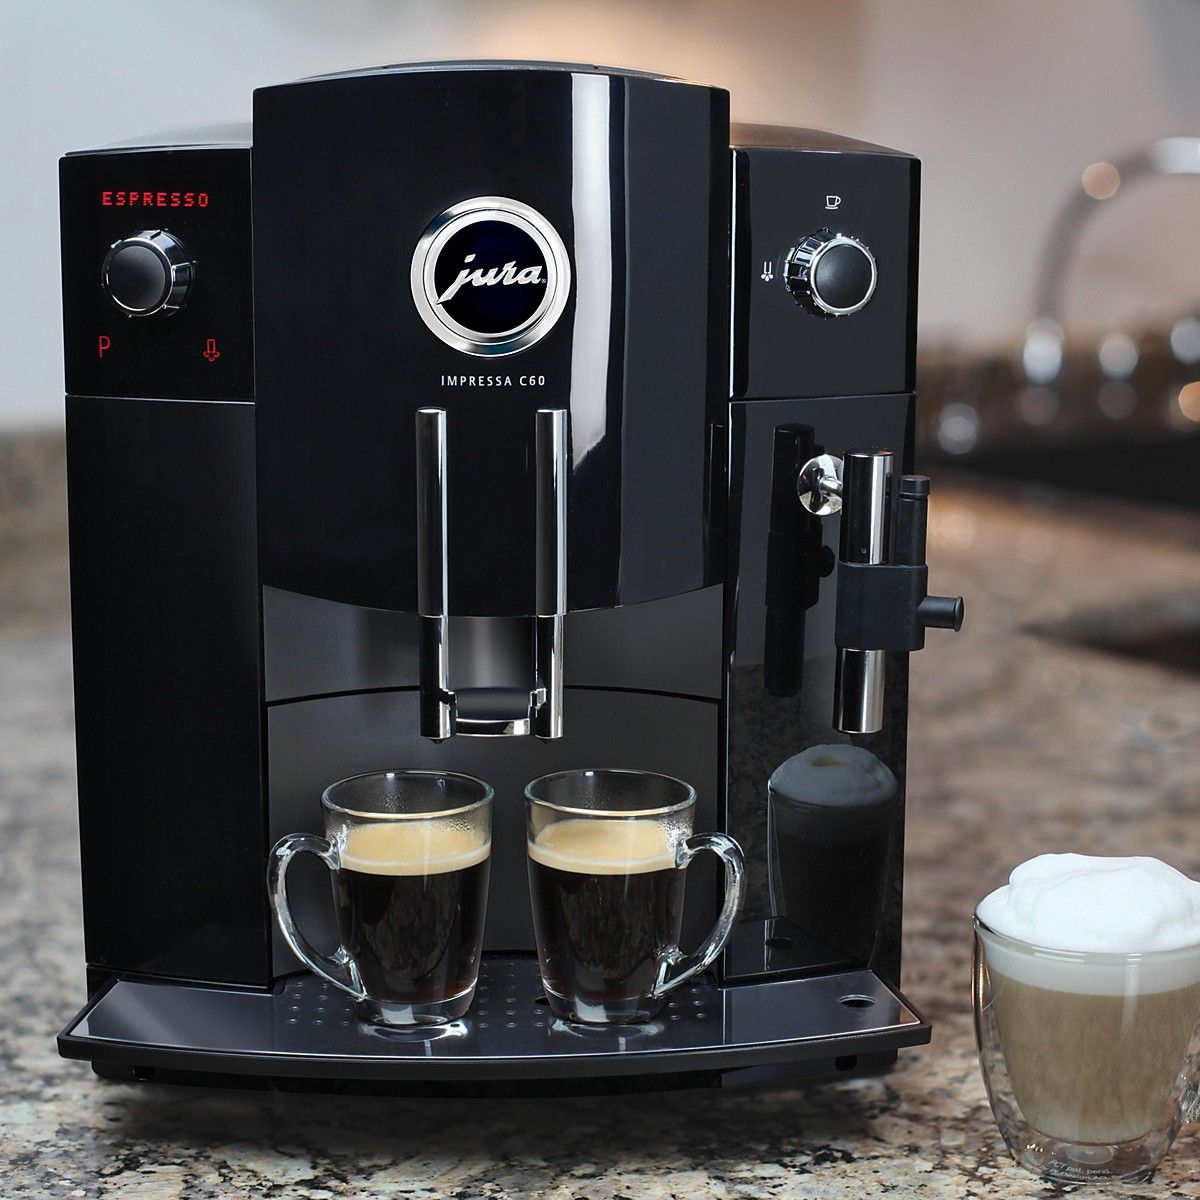 How To Clean Jura Coffee Machine